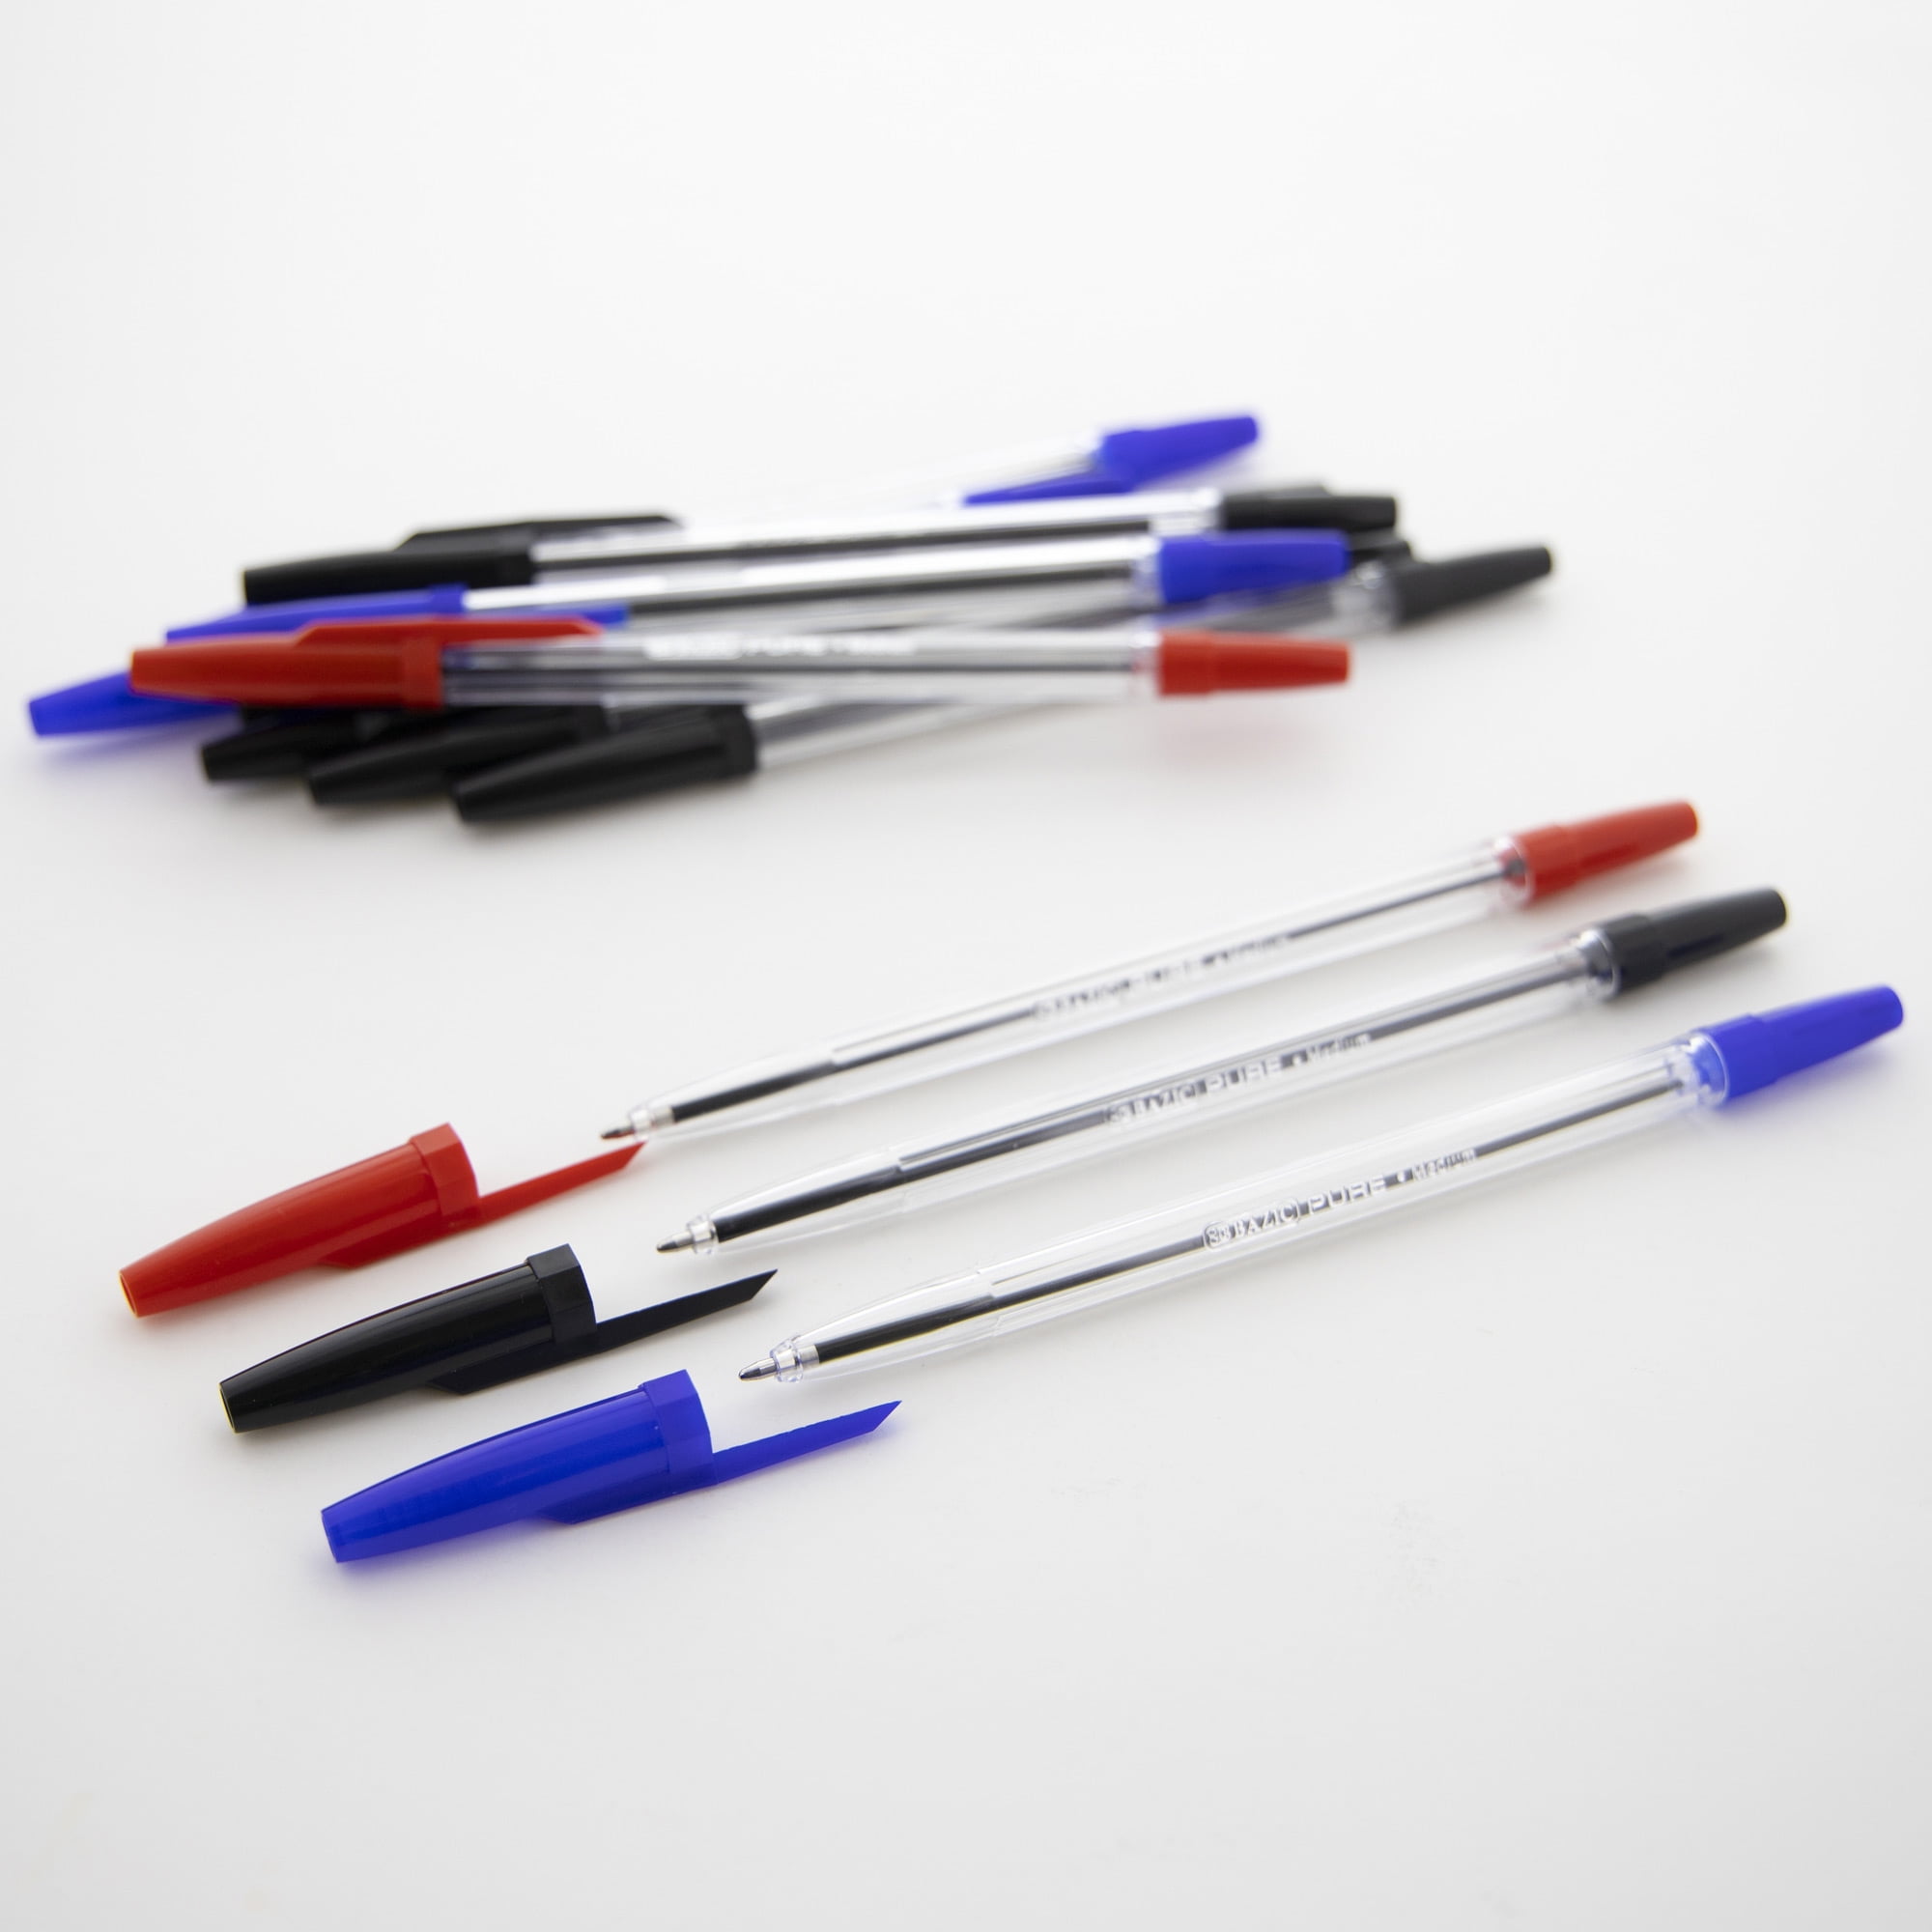 BAZIC 10 Pure Neon Color Stick Pen-pack of-144